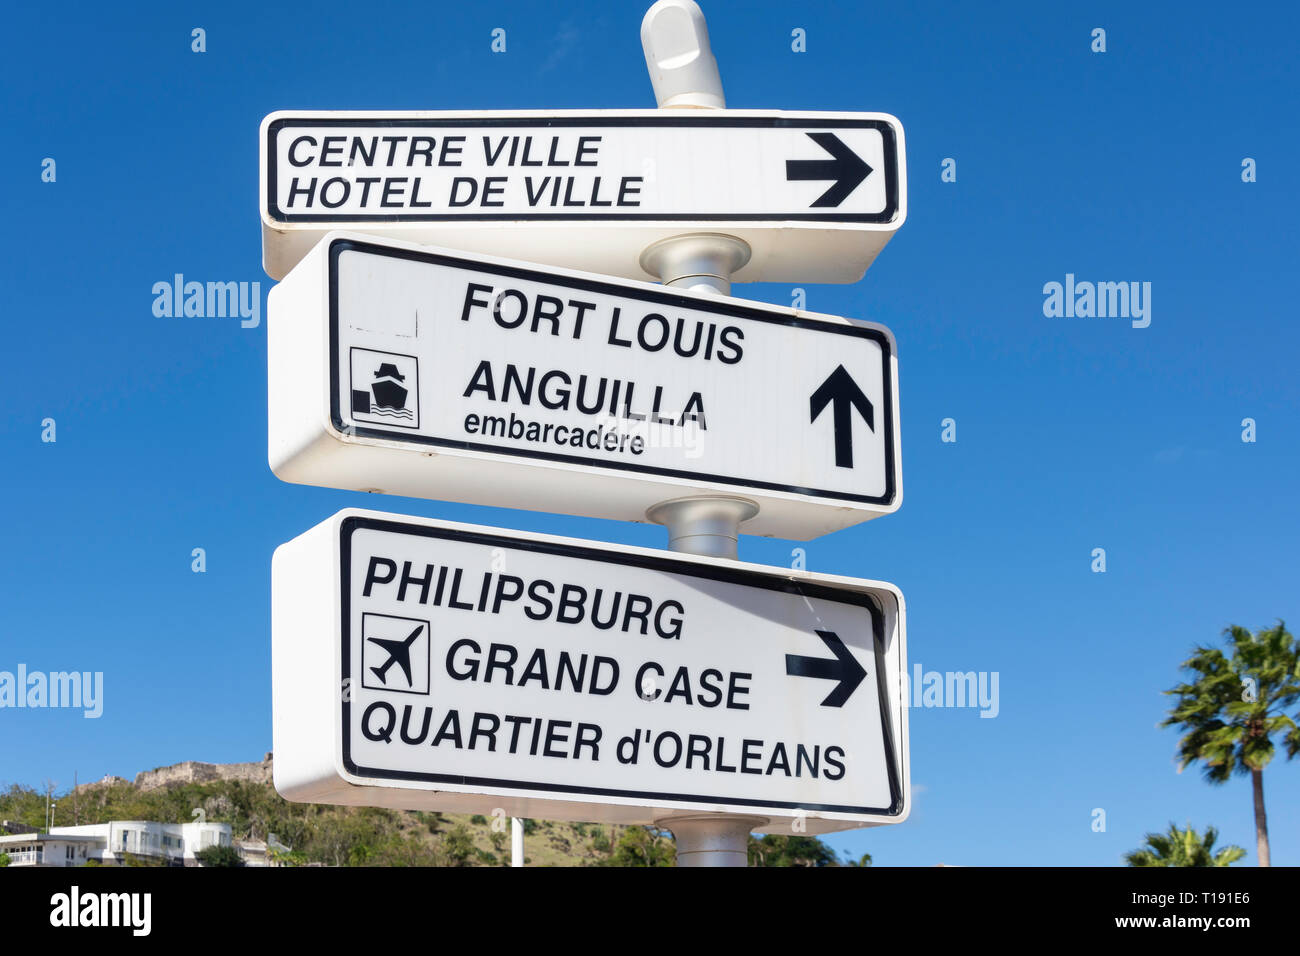 La direction de la circulation des signes, Boulevard de France, Marigot, Saint Martin, Petites Antilles, Caraïbes Banque D'Images